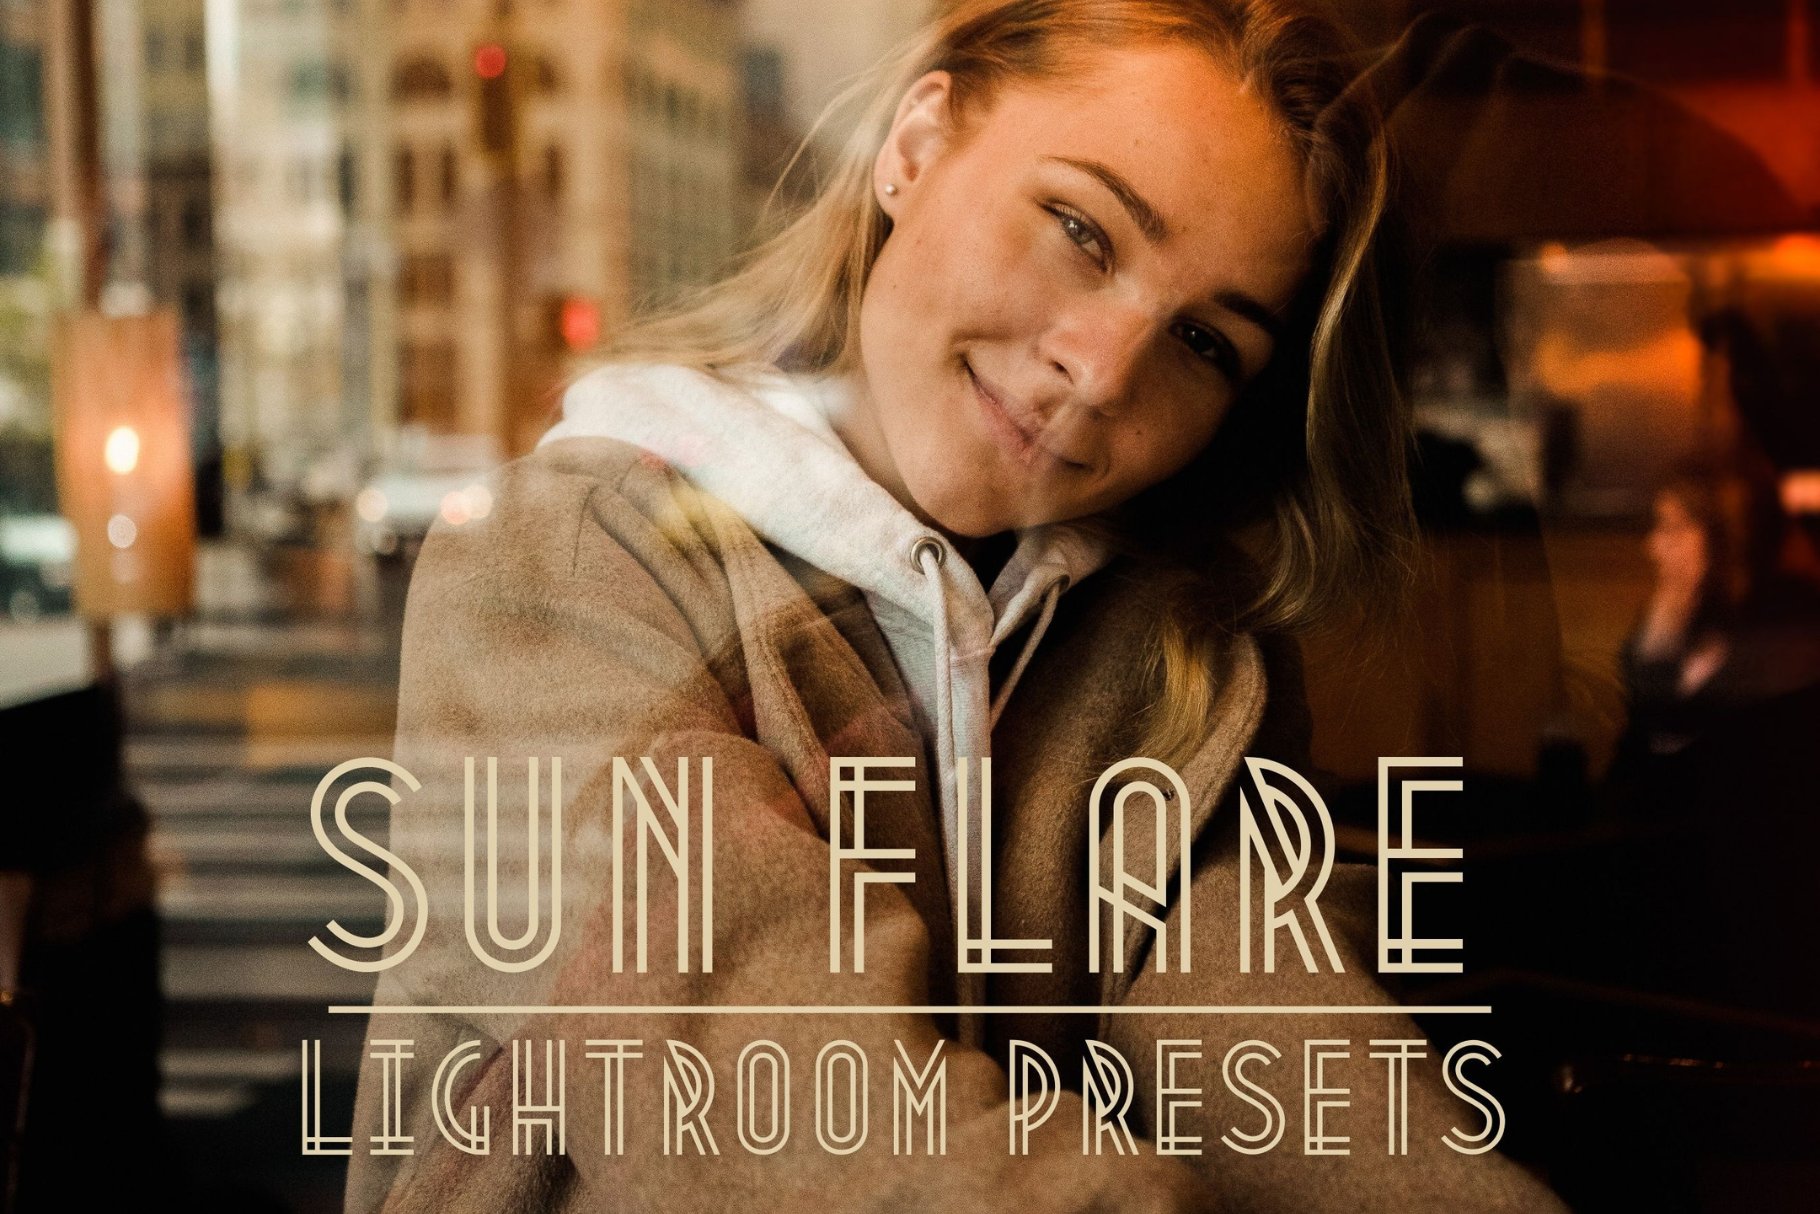 Sun Flare Lightroom Presetscover image.